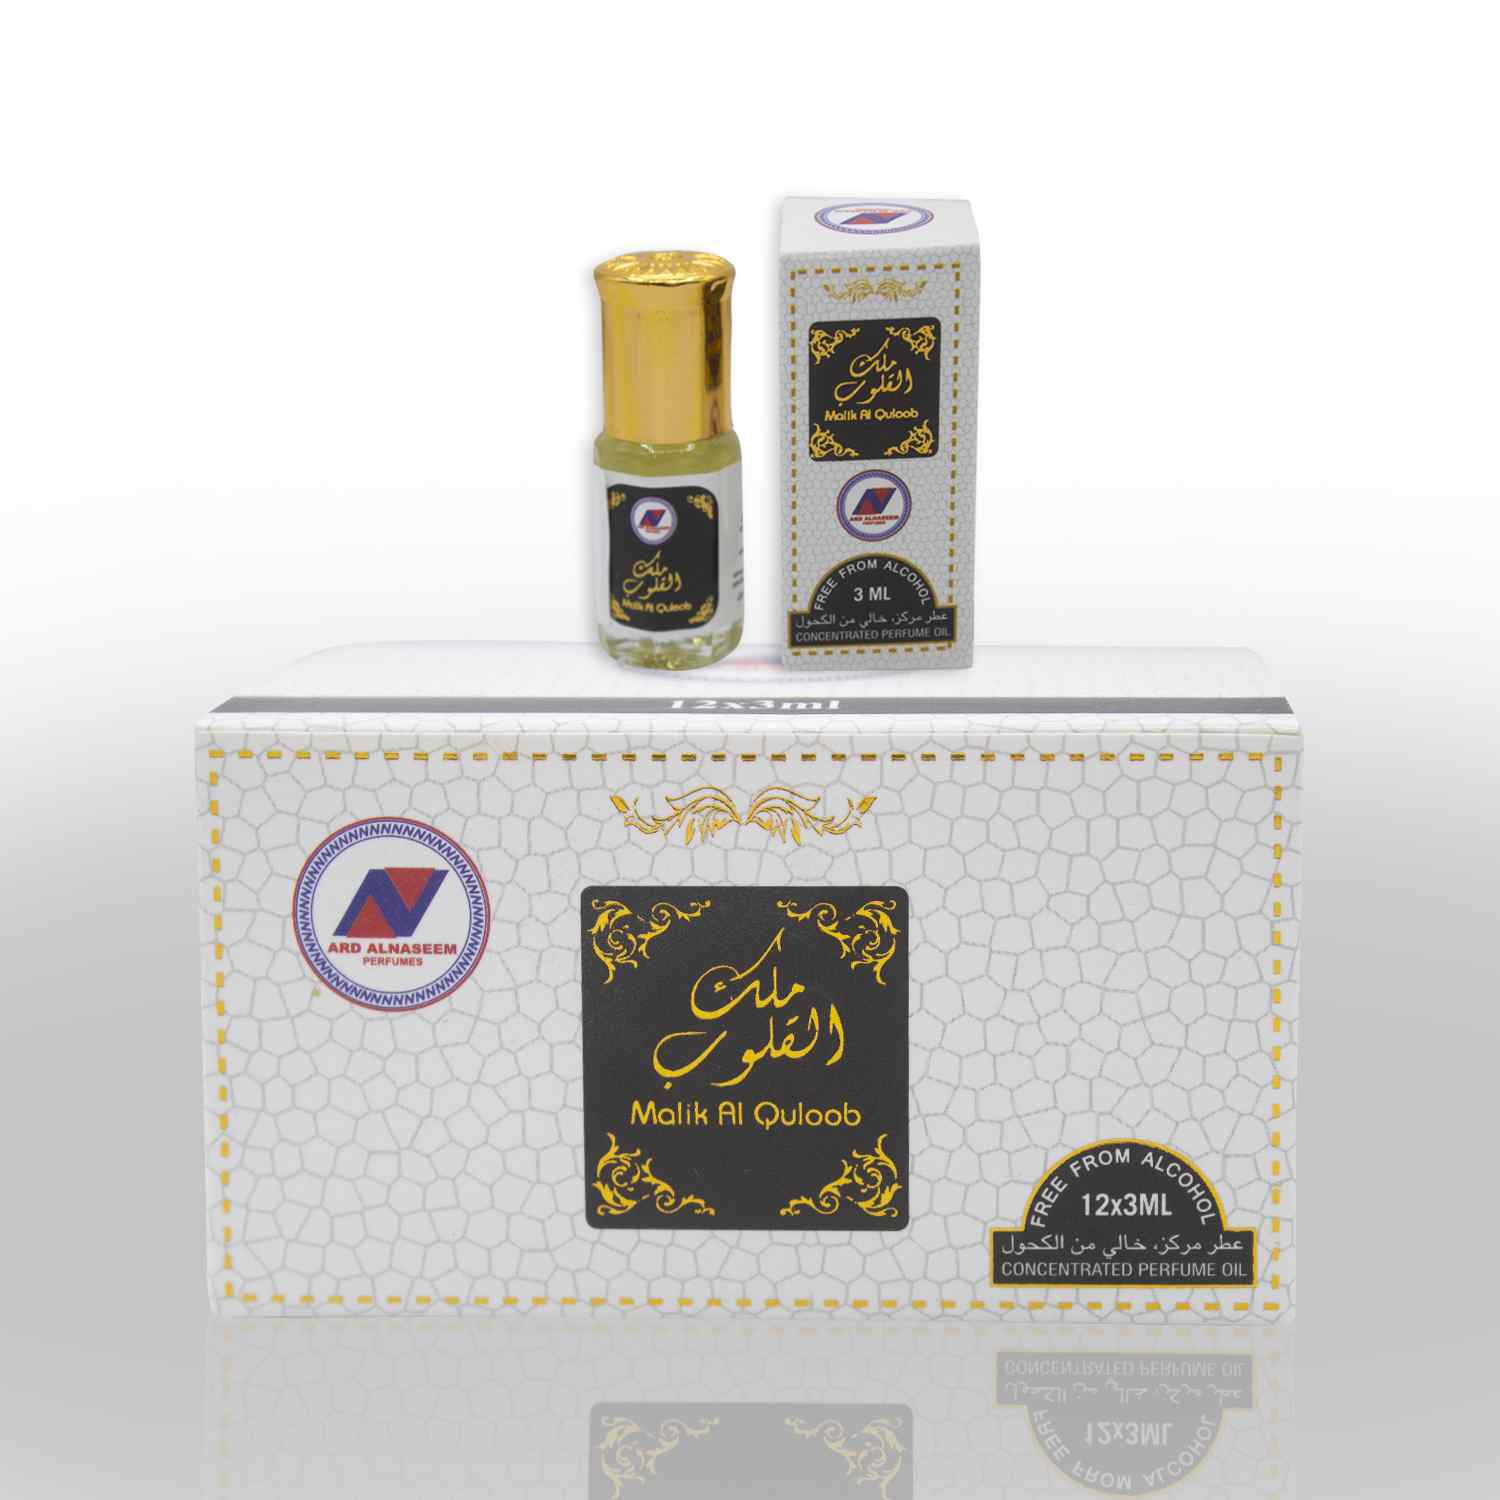 Malik-Al-Quloob-3ml-Rollan-Attar-by-ARD-perfumes